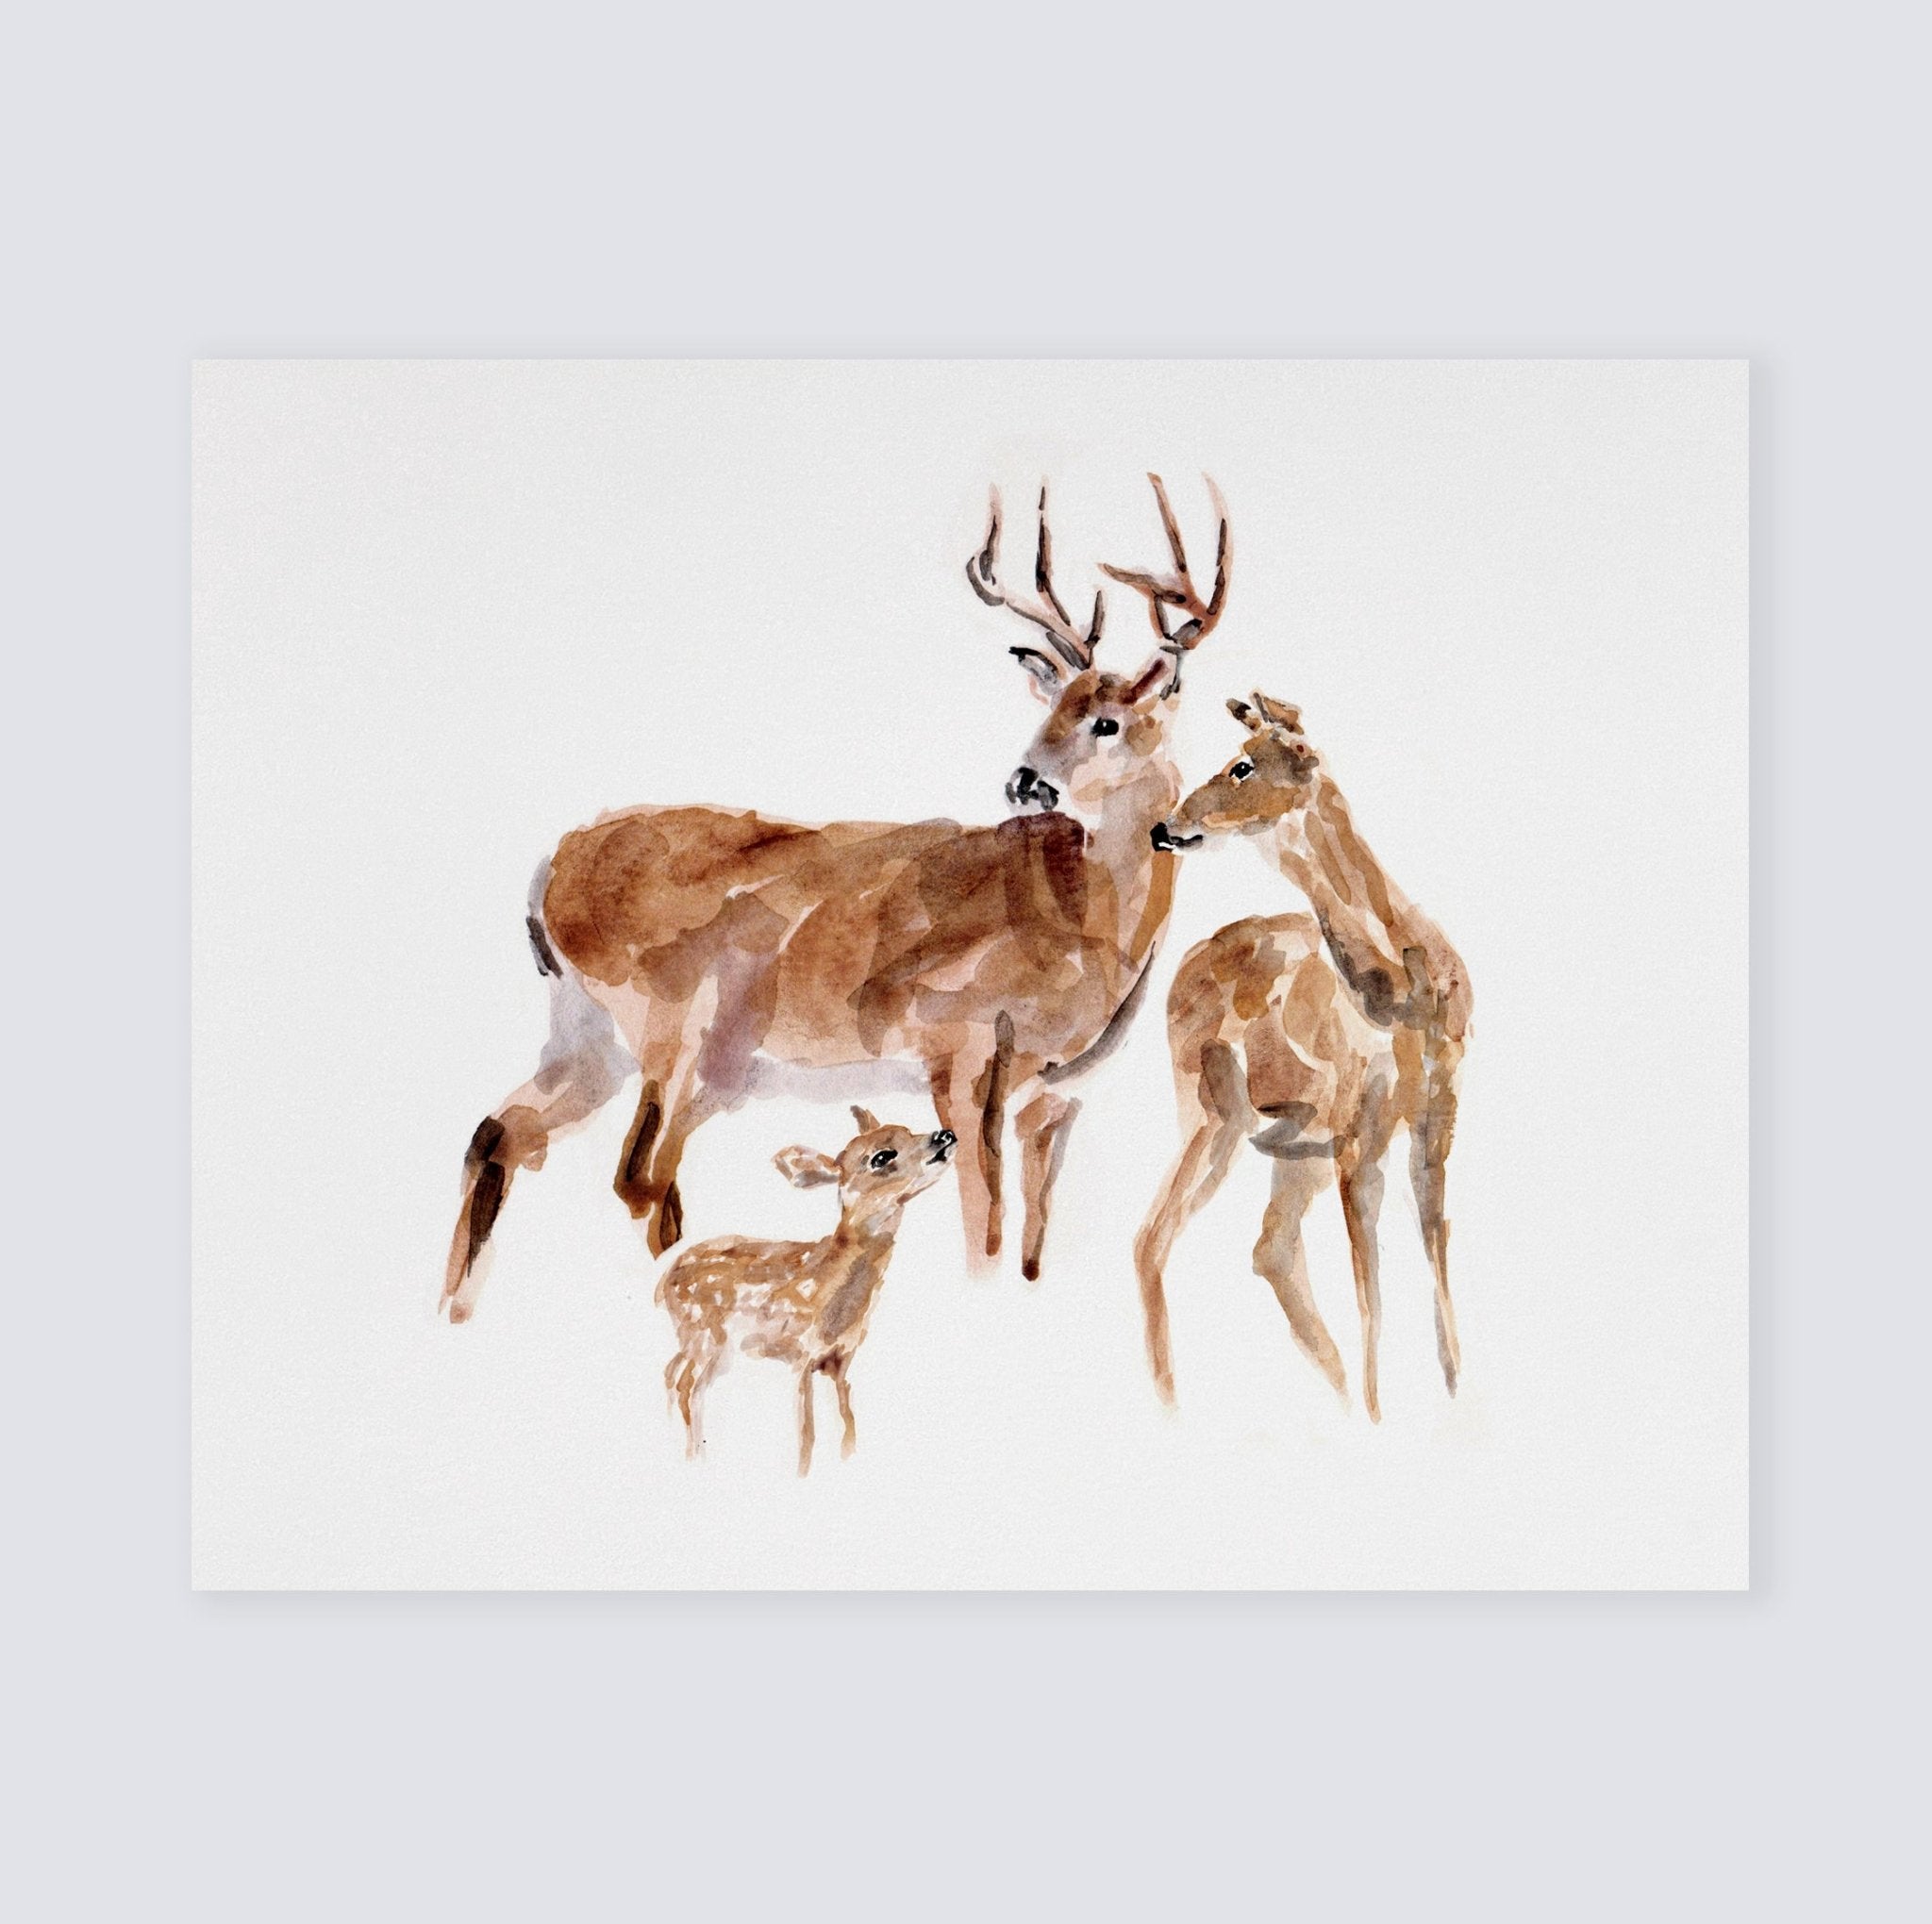 Watercolor Deer Wall Art Print